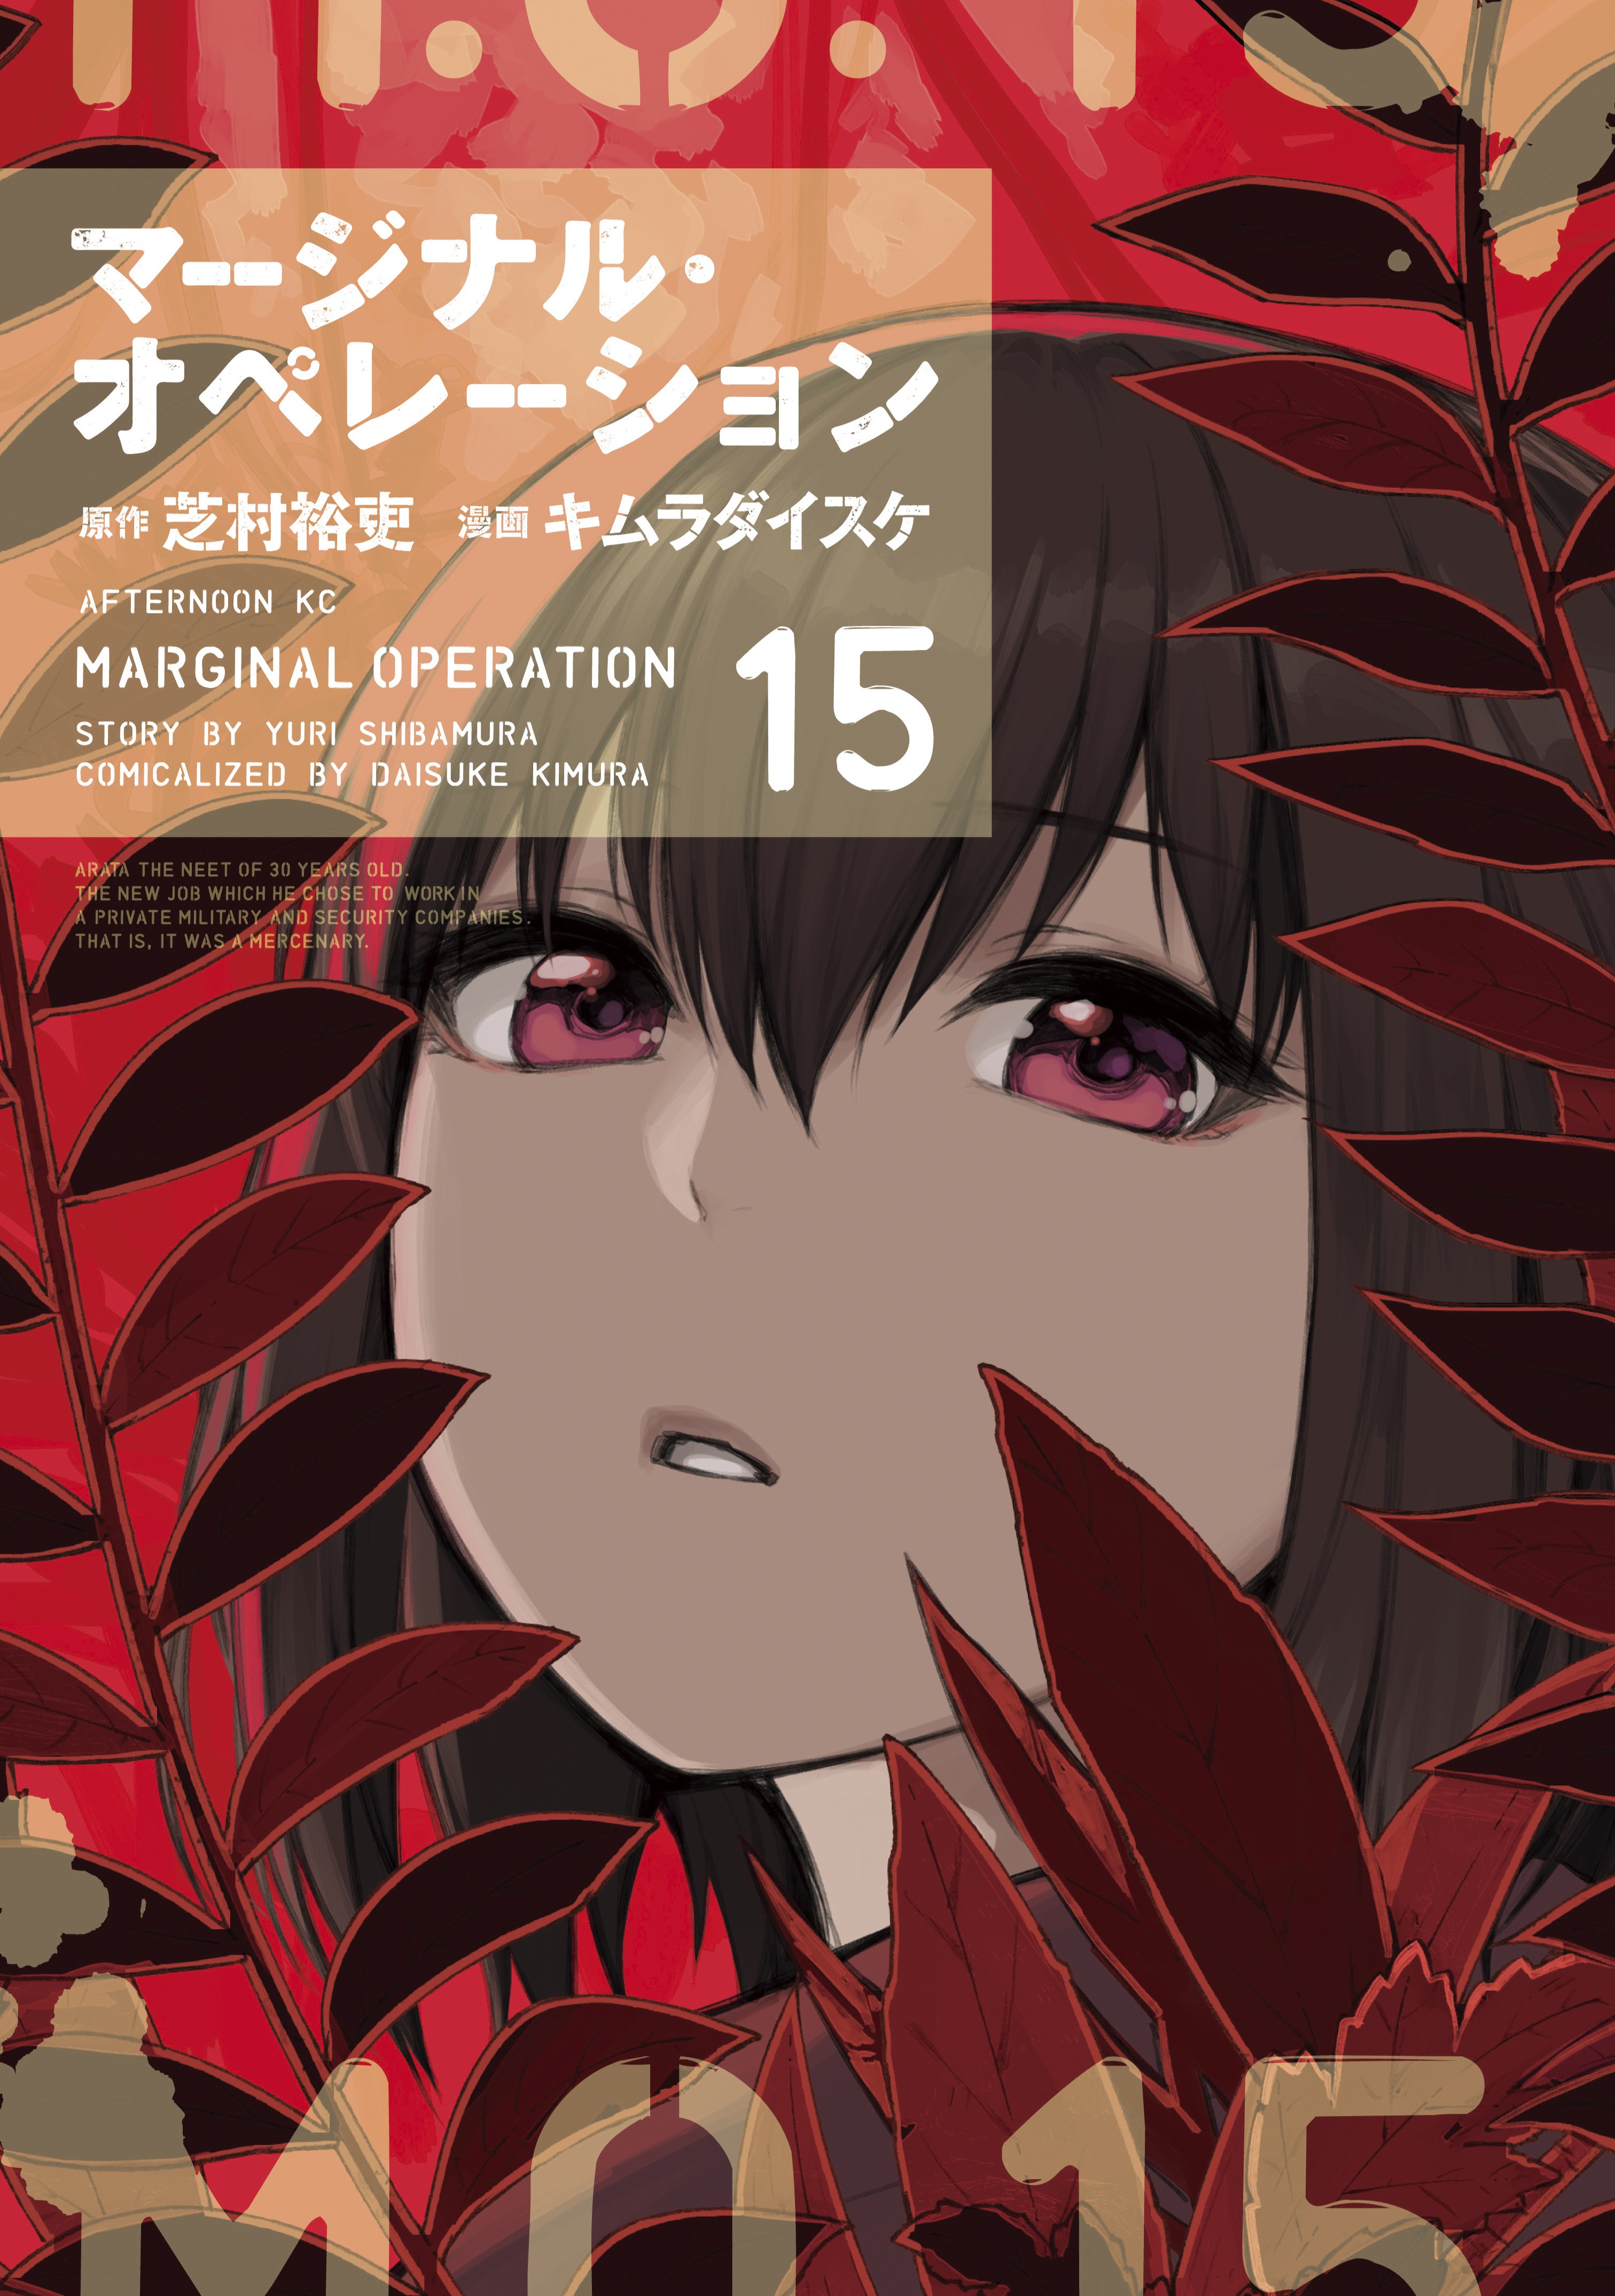 Marginal Operation Zenshi: Haruka Toudo no Canaan - MangaDex